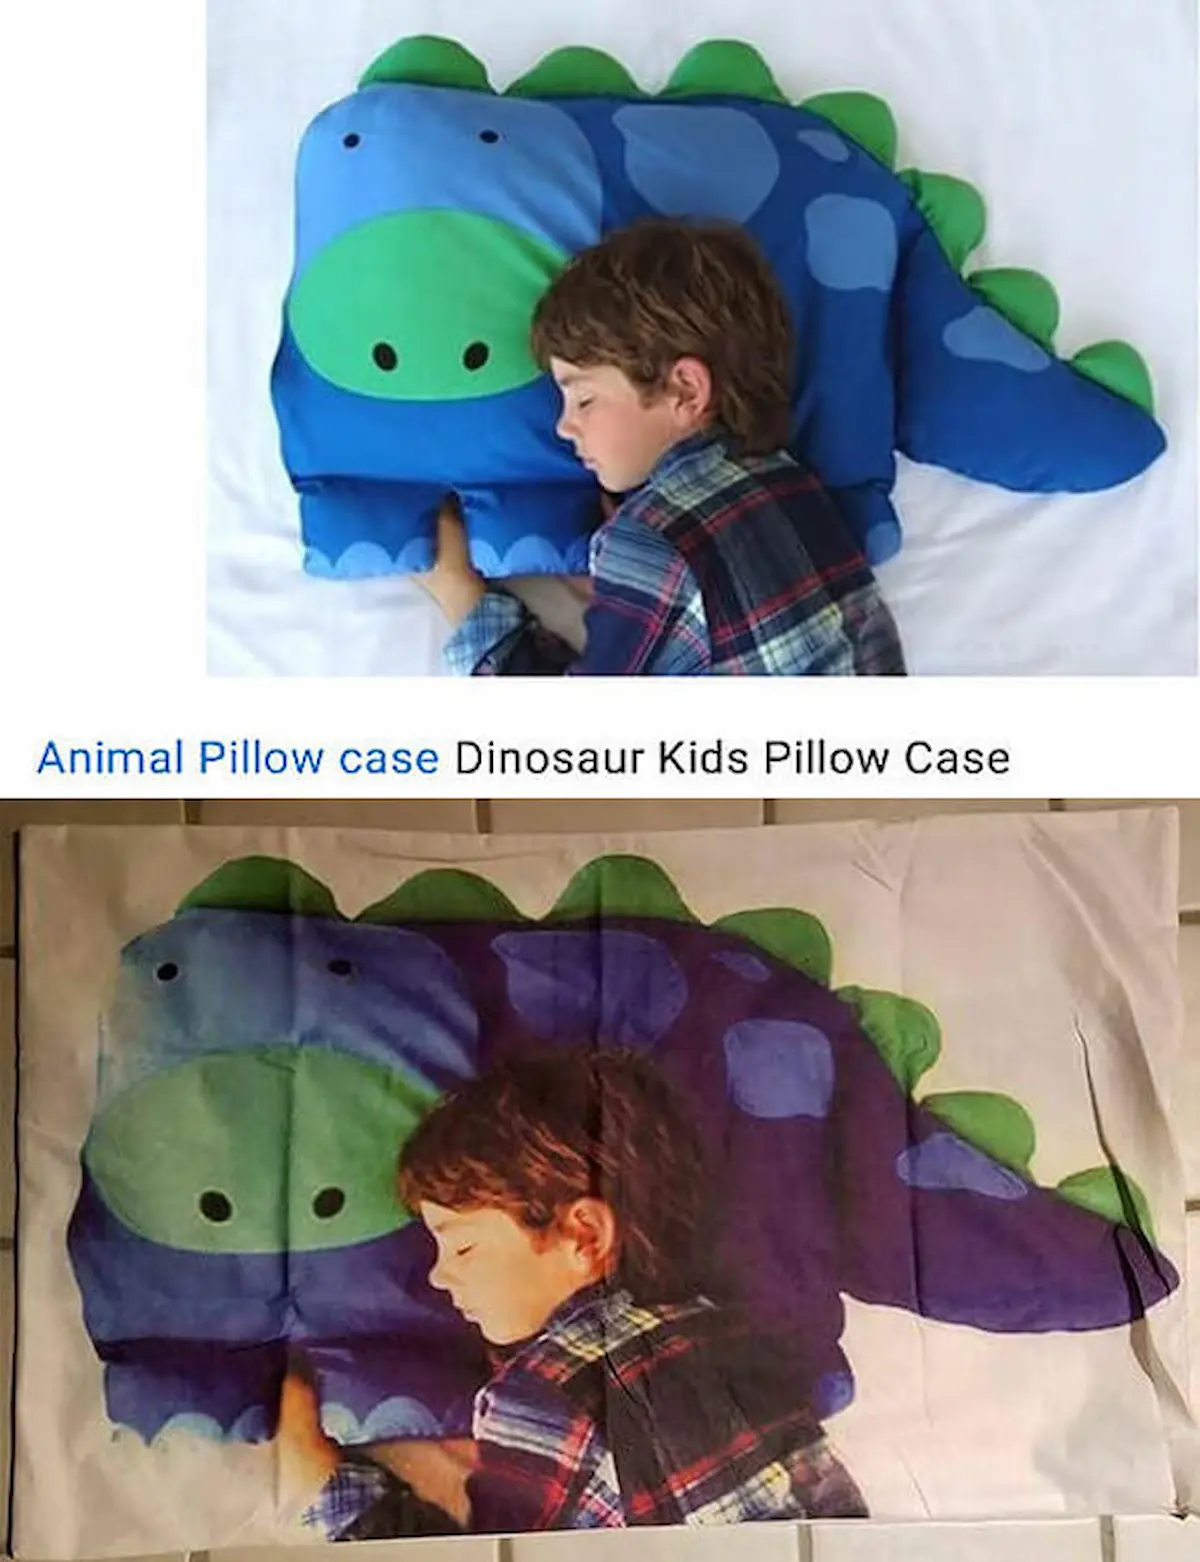 animal-pillowcase-and-child-reddit